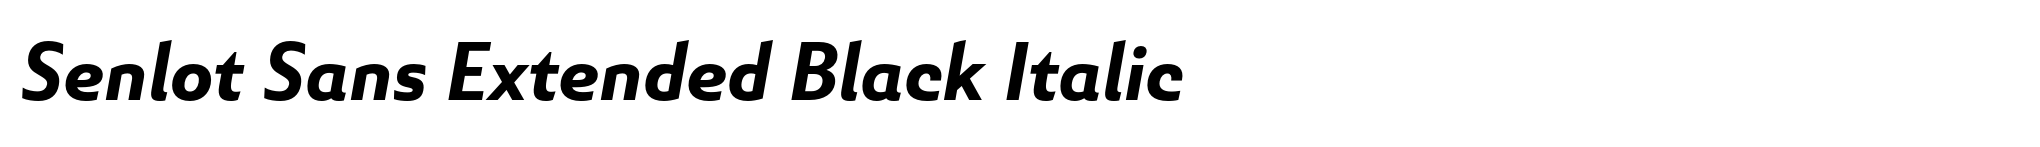 Senlot Sans Extended Black Italic image